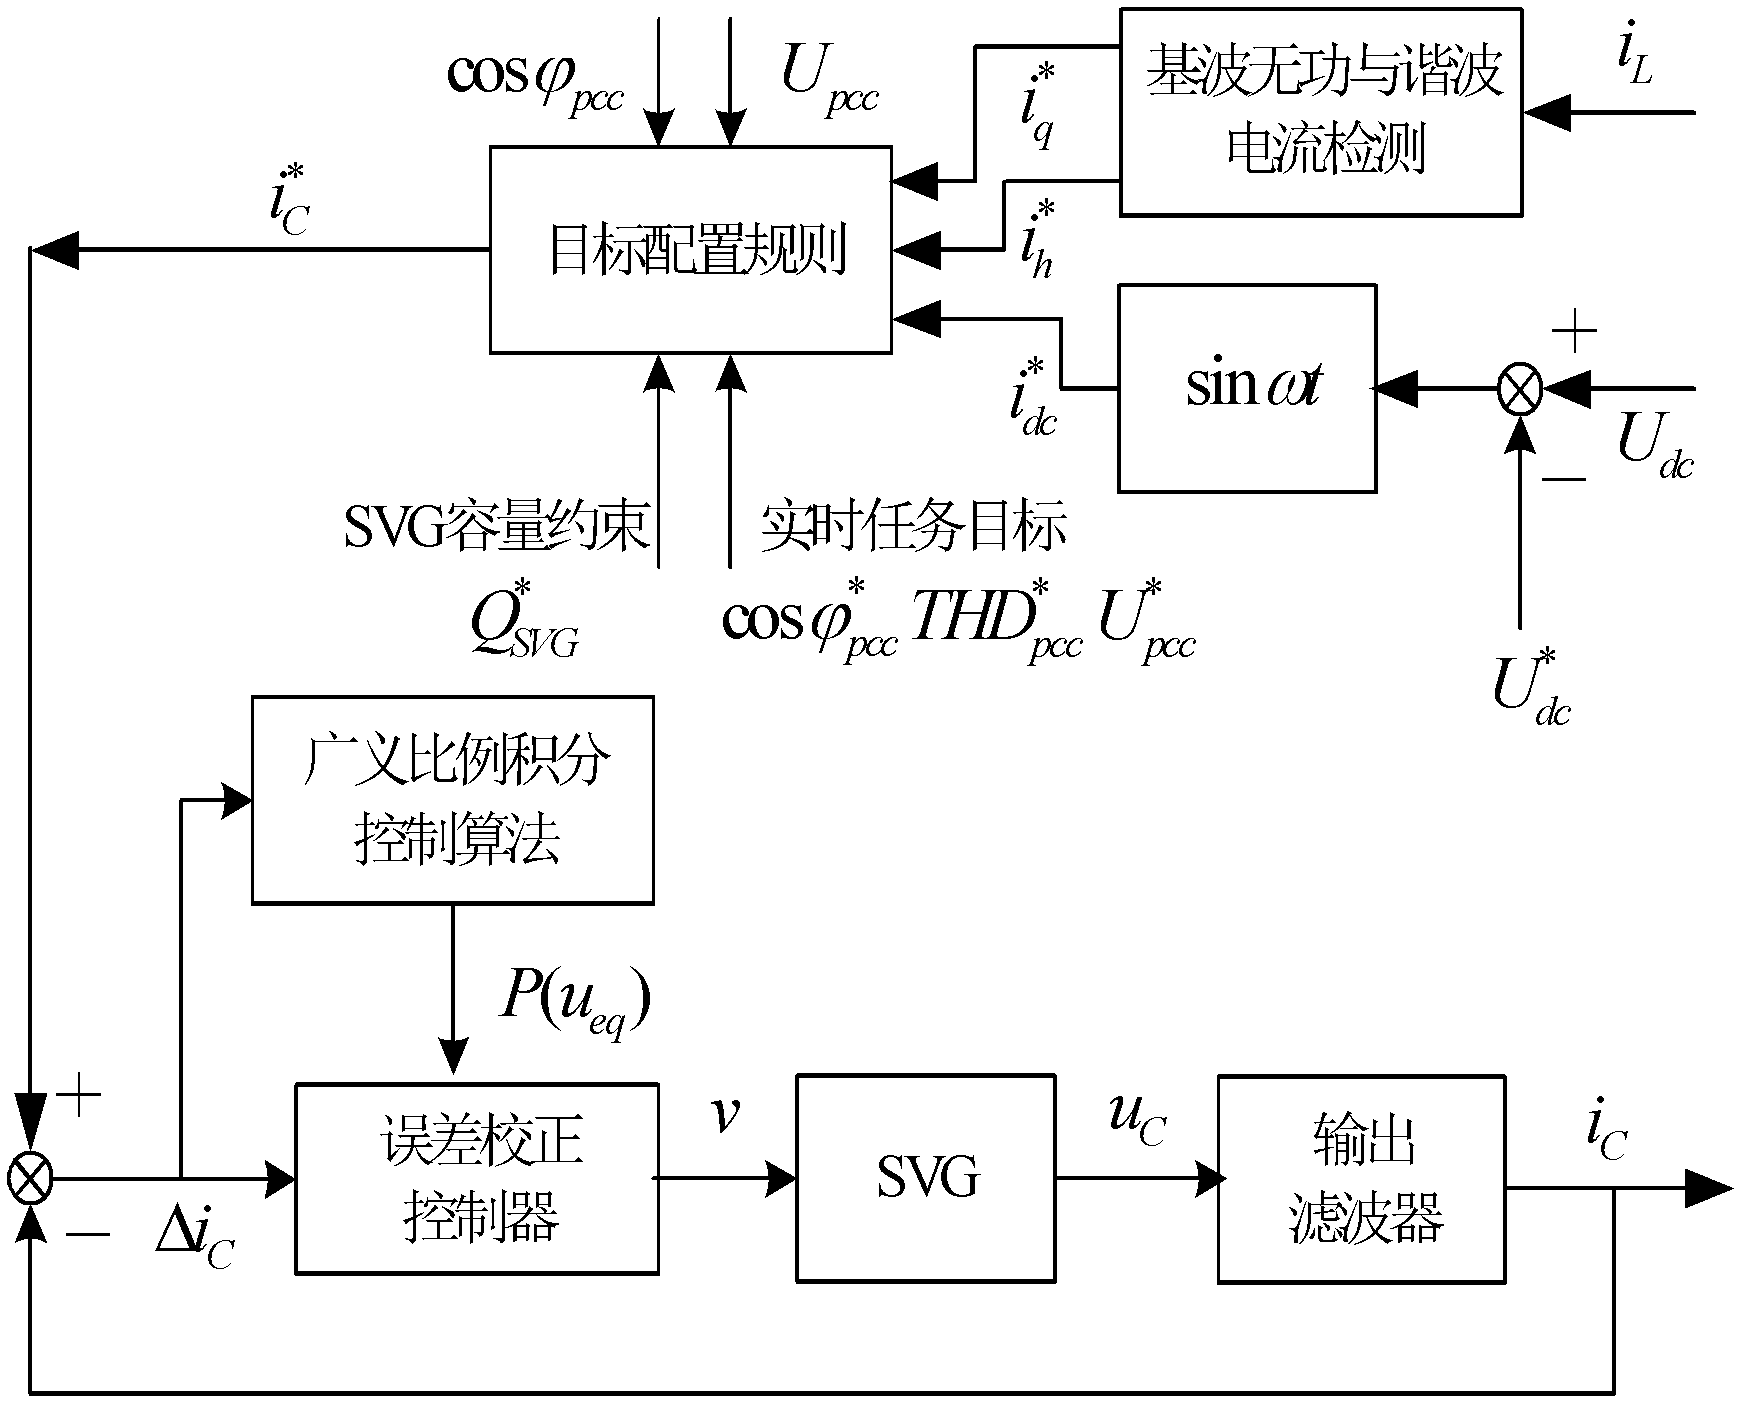 Control method for micro-grid SVG (Static Var Generator) multi-target configuration